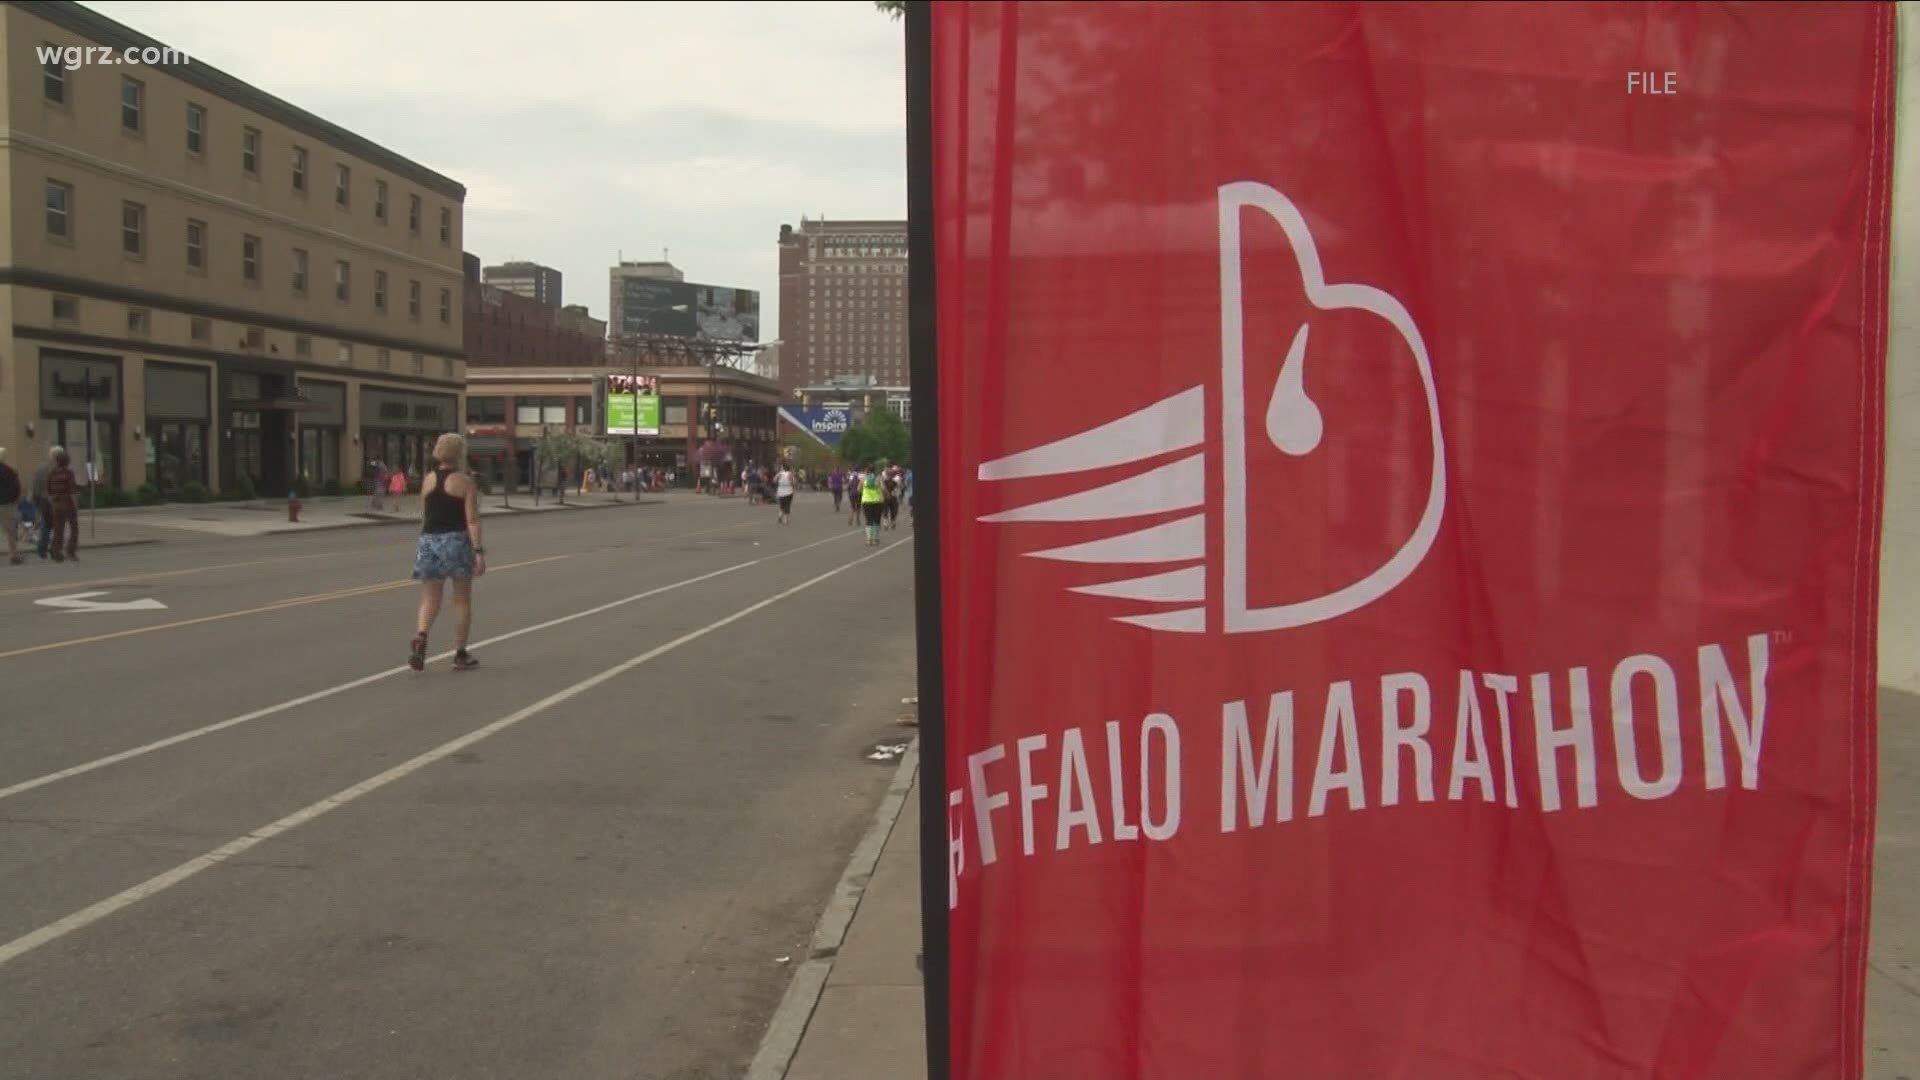 Buffalo marathon will be this June 26th & 27th